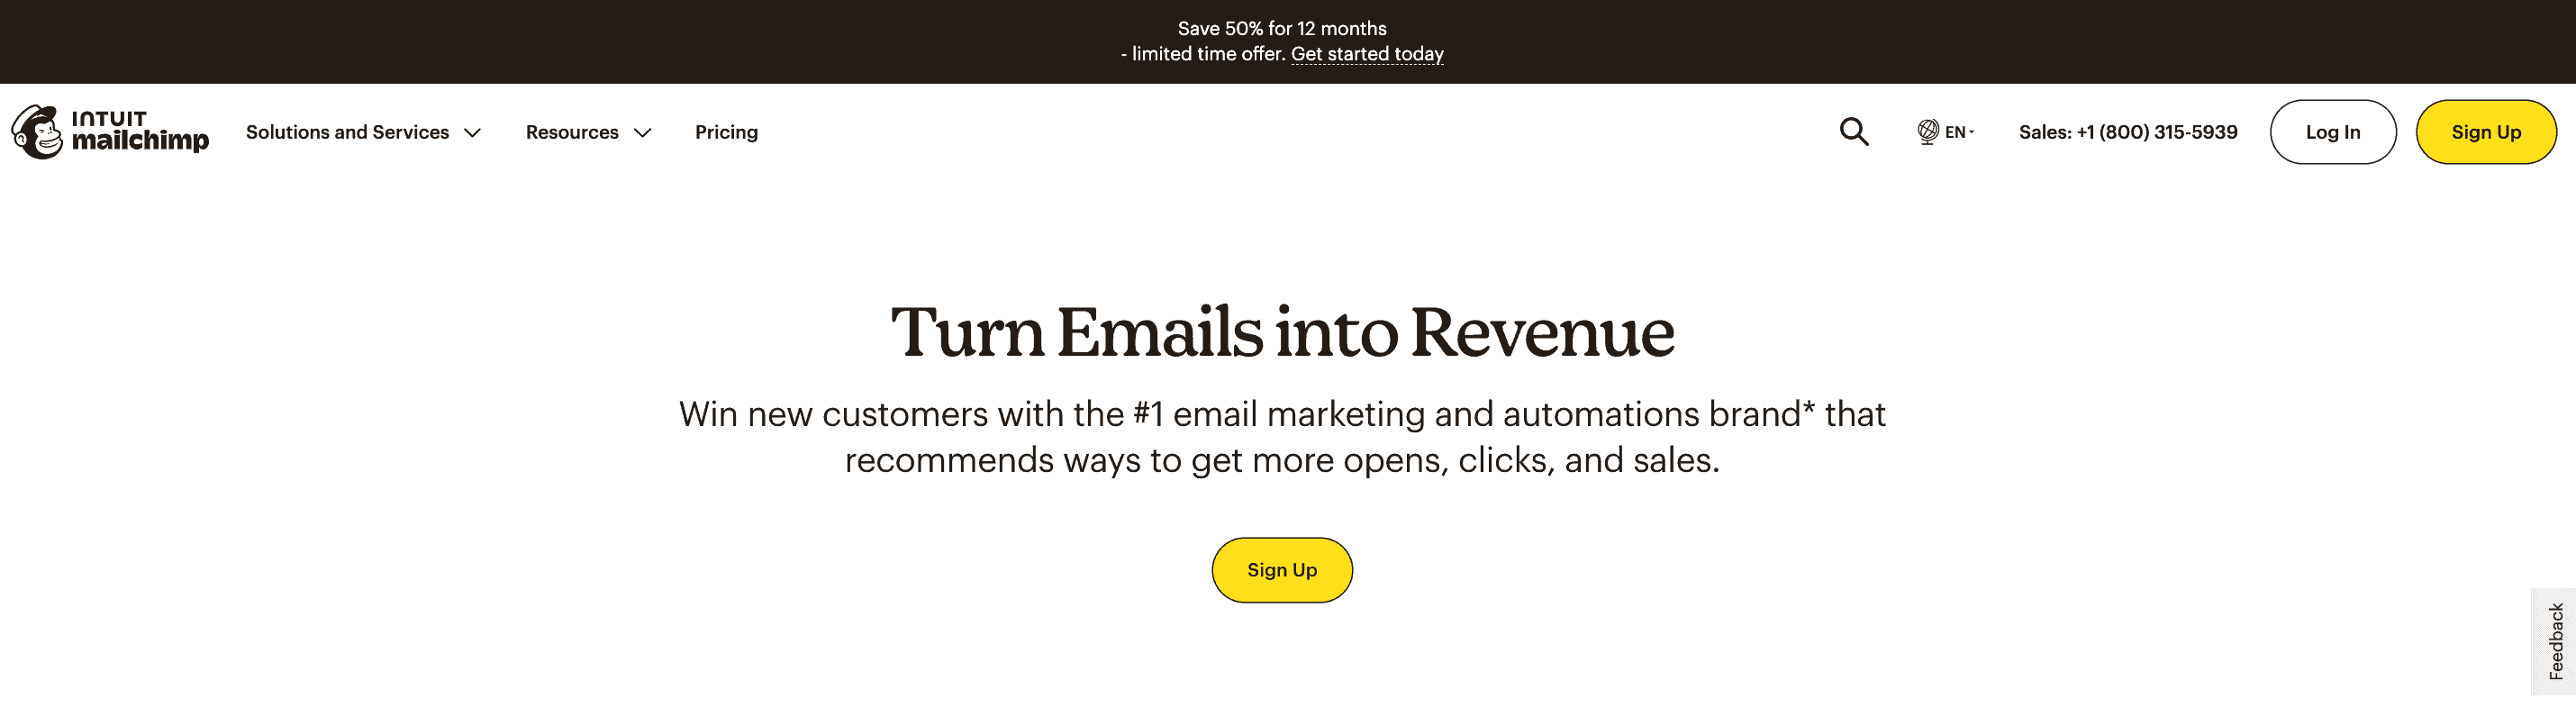 mailchimp email marketing automation